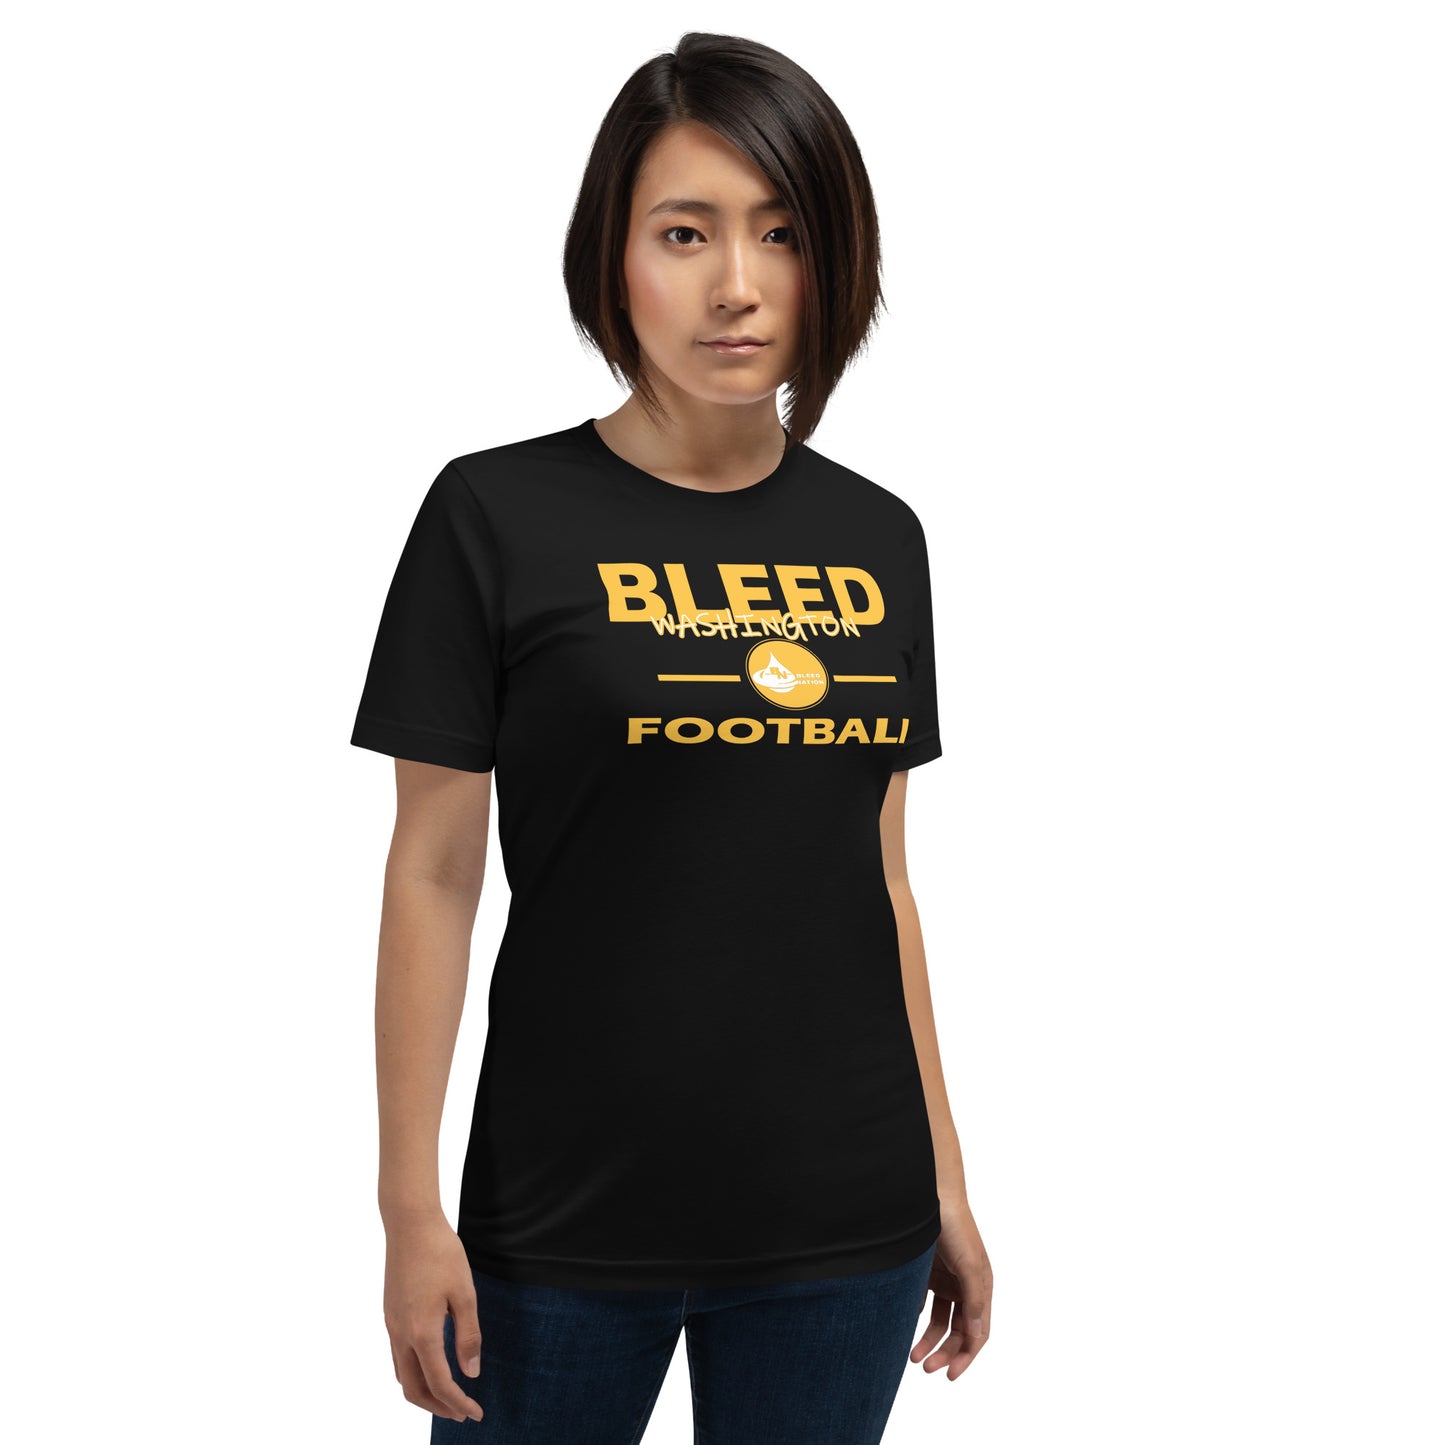 Bleed Washington Football Unisex t-shirt